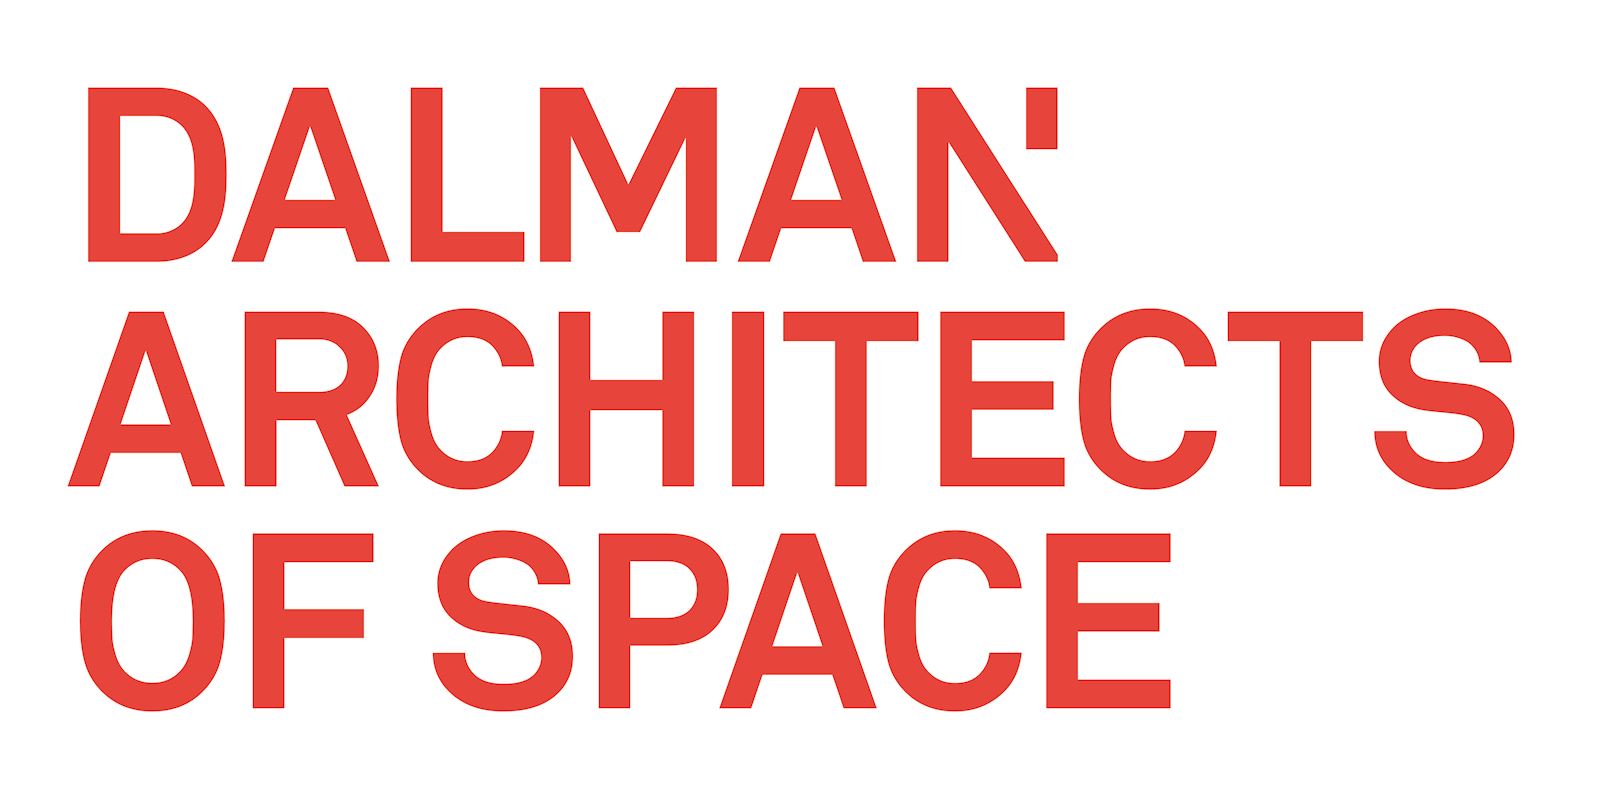 Dalman Architects